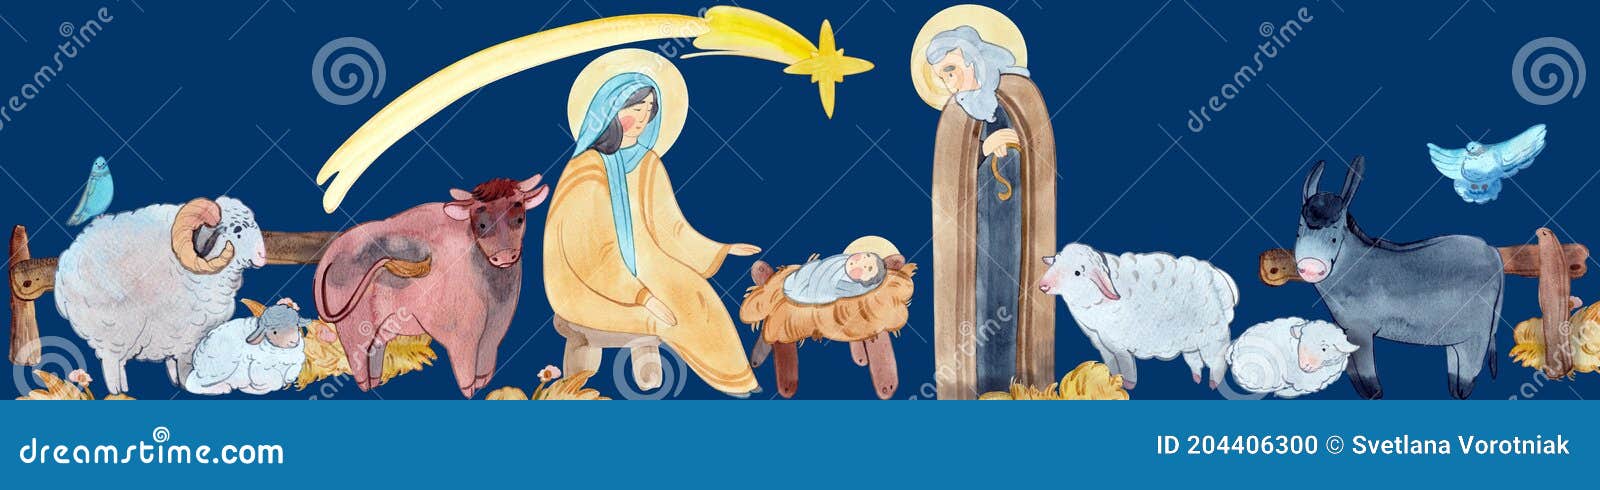 border of christian nativity scene on blue background.